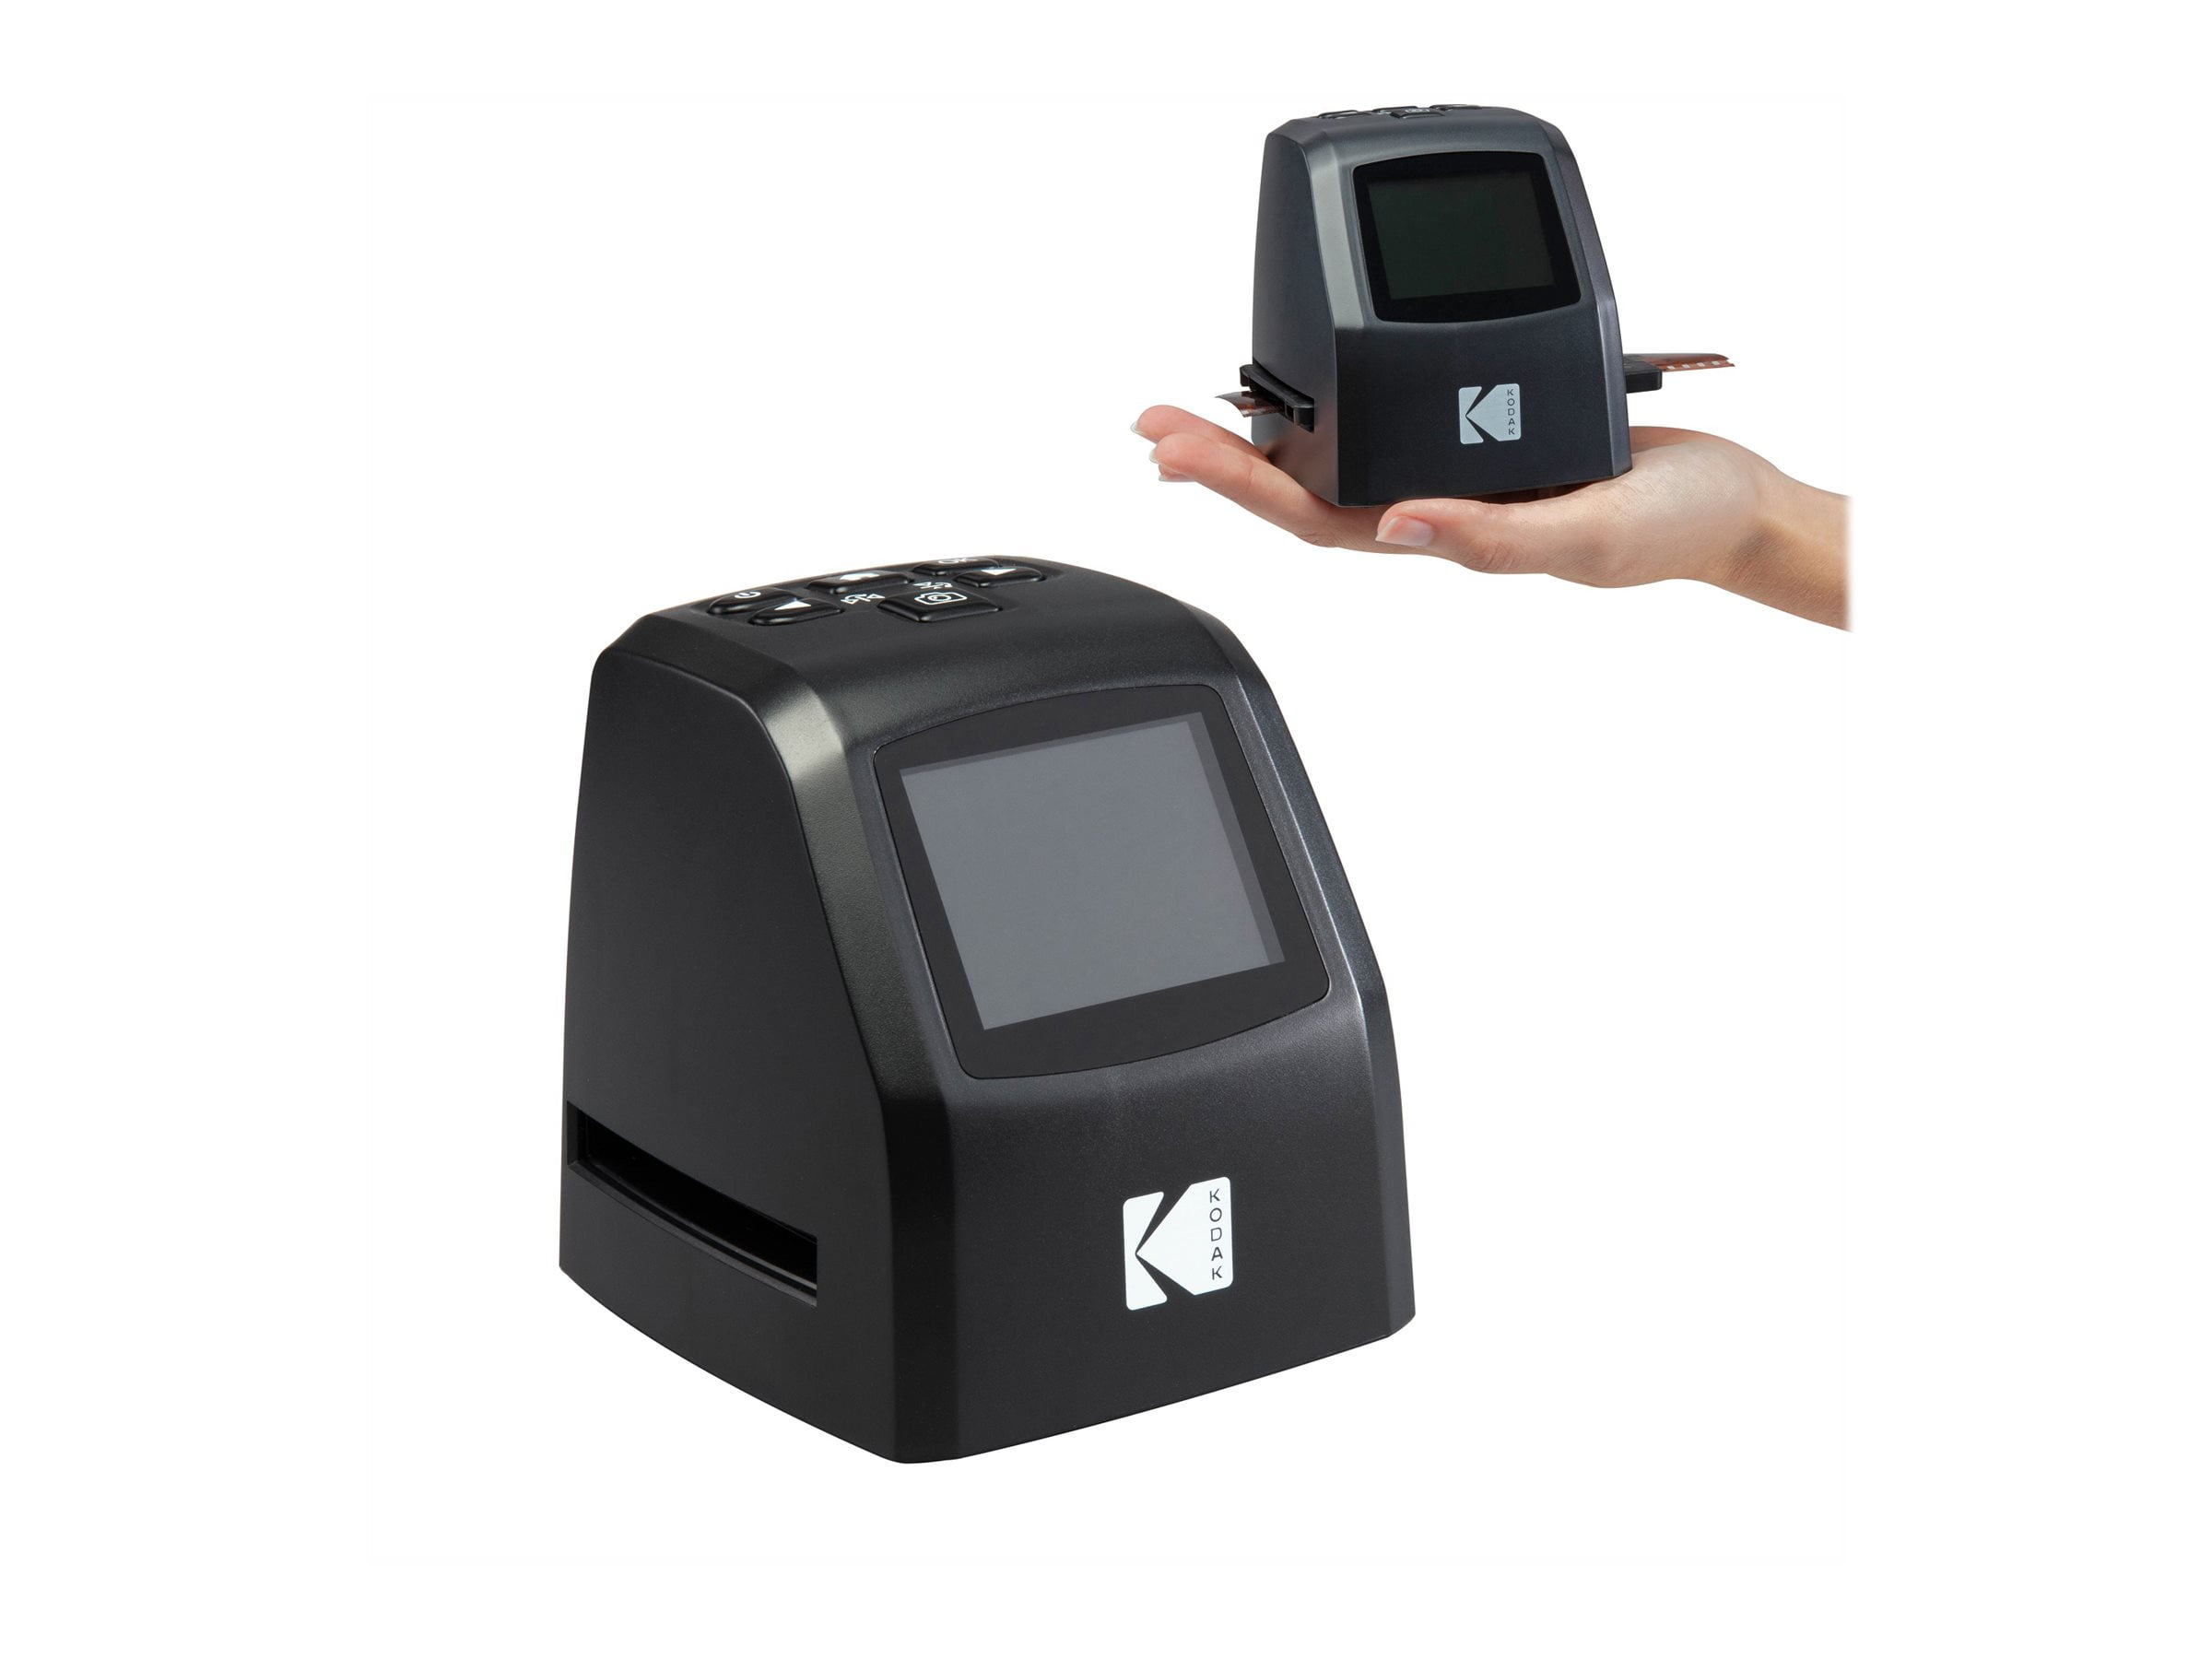 KODAK Mobile Film Scanner - Fun Novelty Scanner Lets You Scan and Play with  Old 35mm Films & Slides Using Your Smartphone Camera - Cardboard Platform